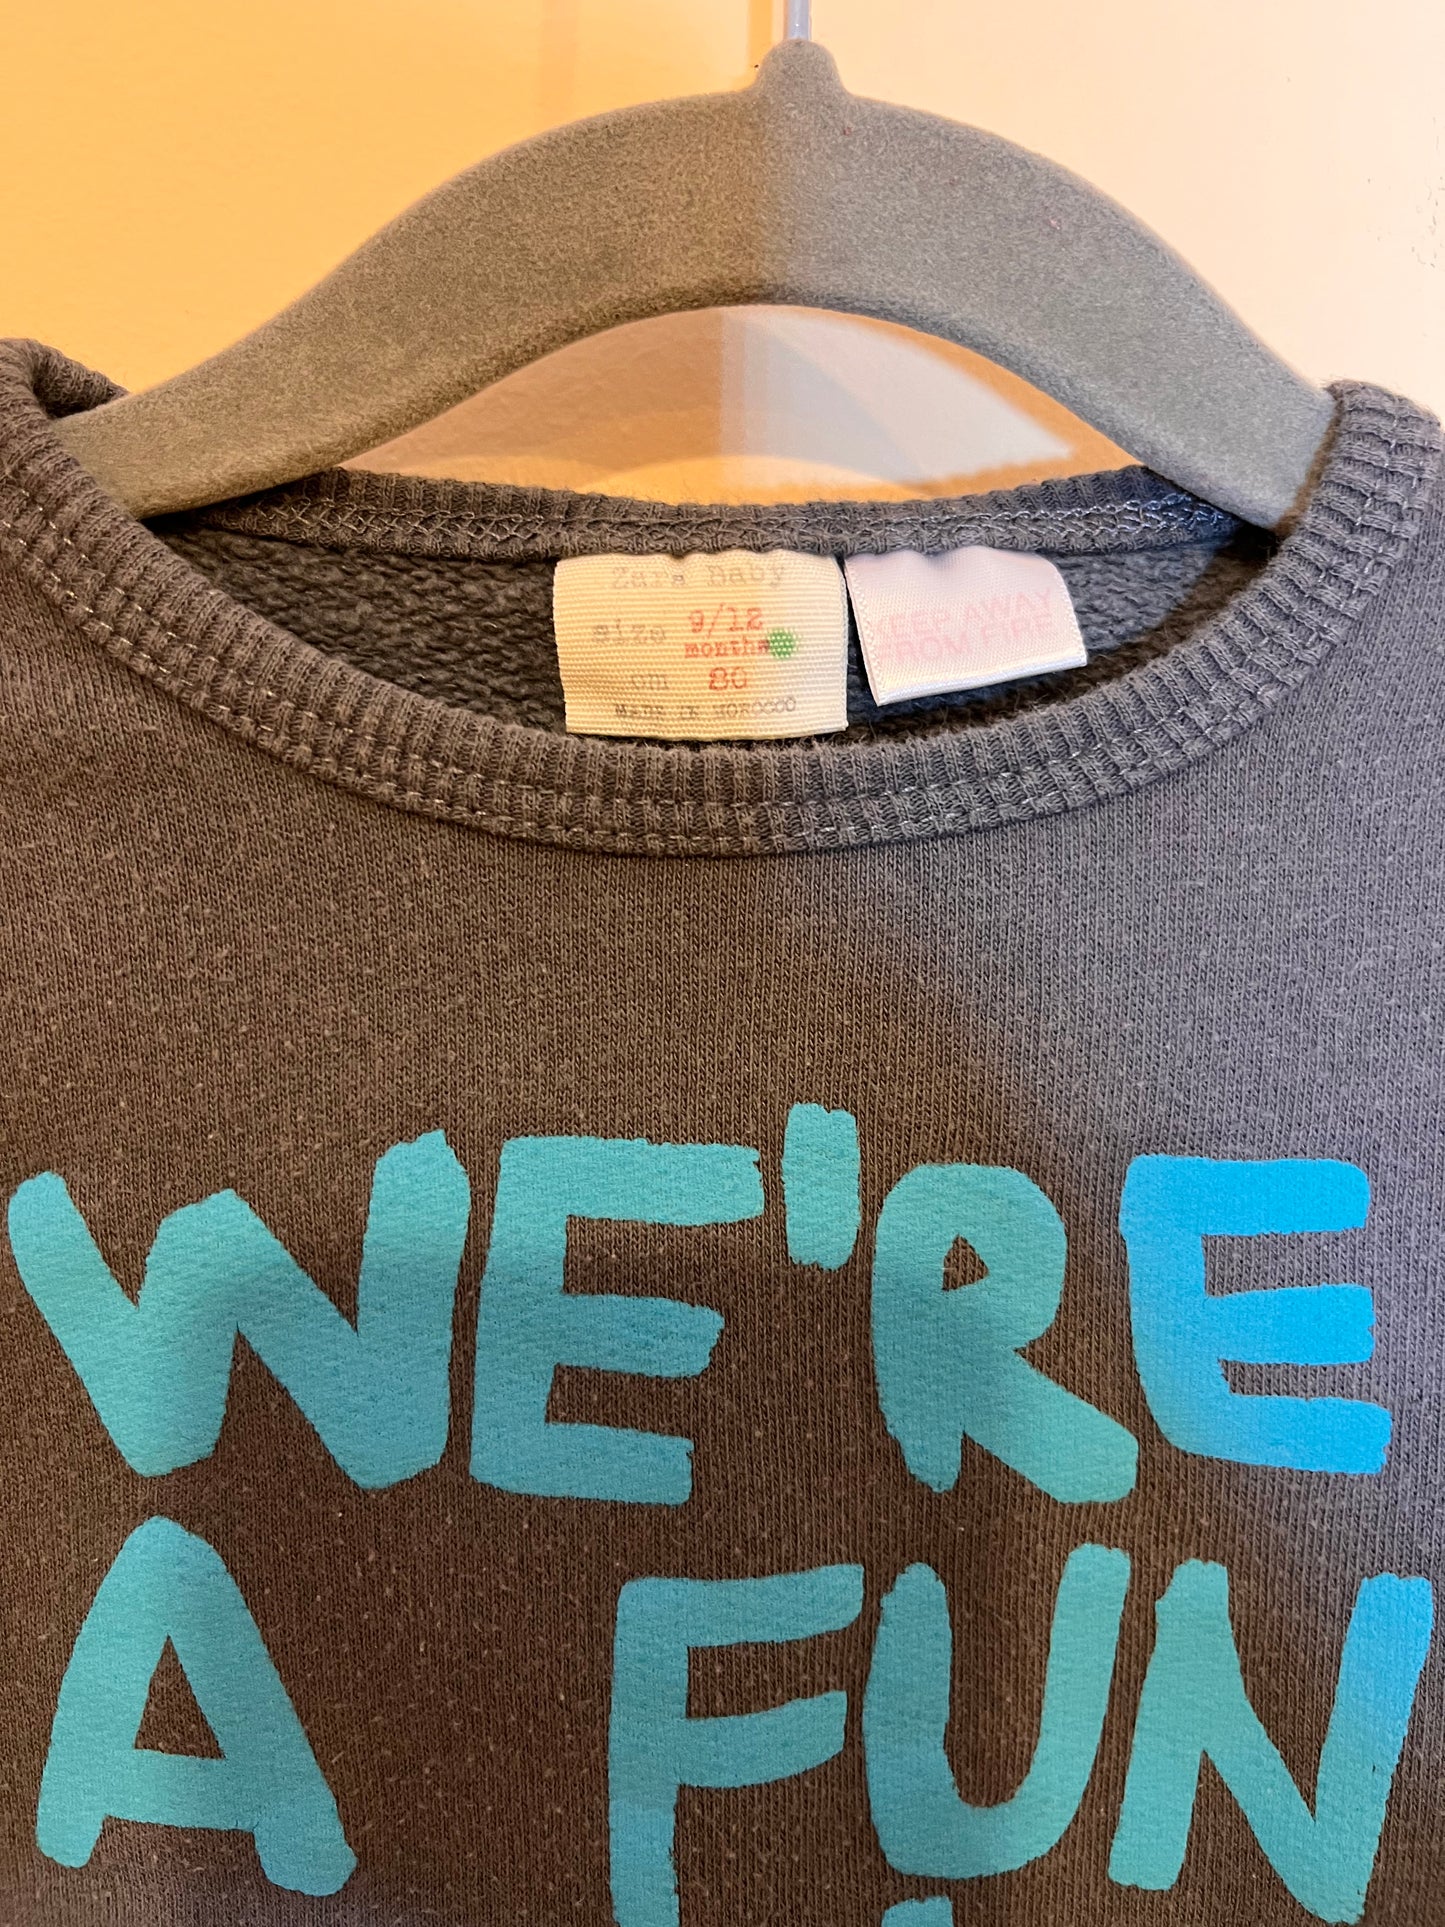 Zara “We’re A Fun Family” Sweater (9-12)